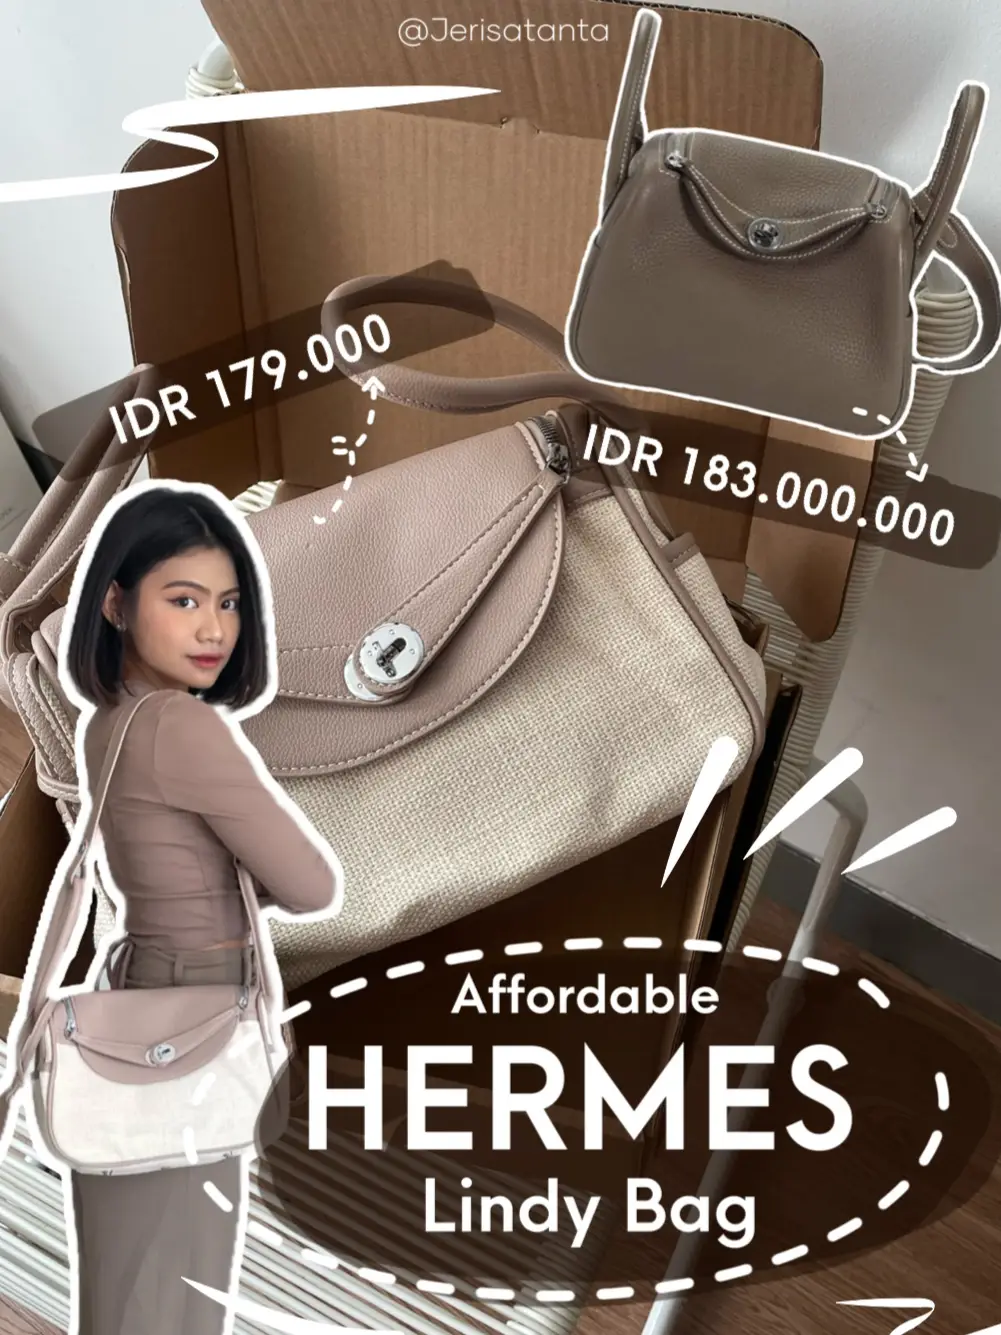 9 Hermes Lindy outfits ideas  hermes lindy, hermes, hermes lindy bag